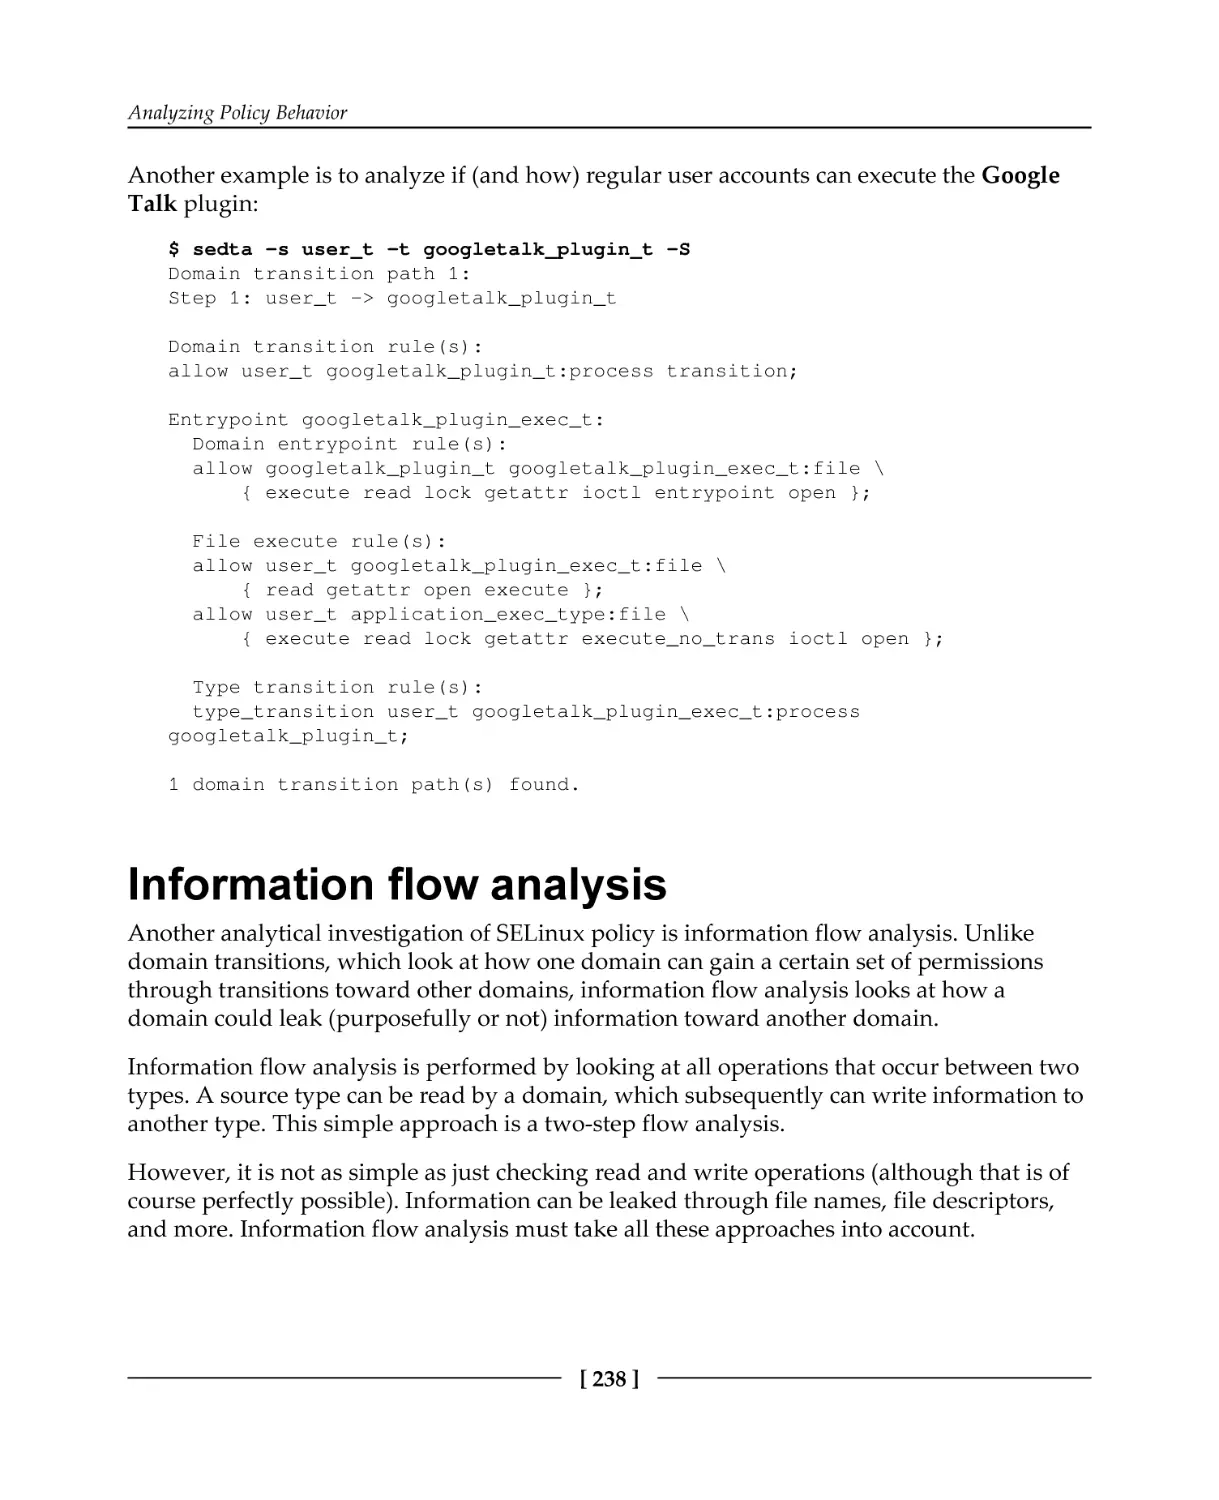 Information flow analysis